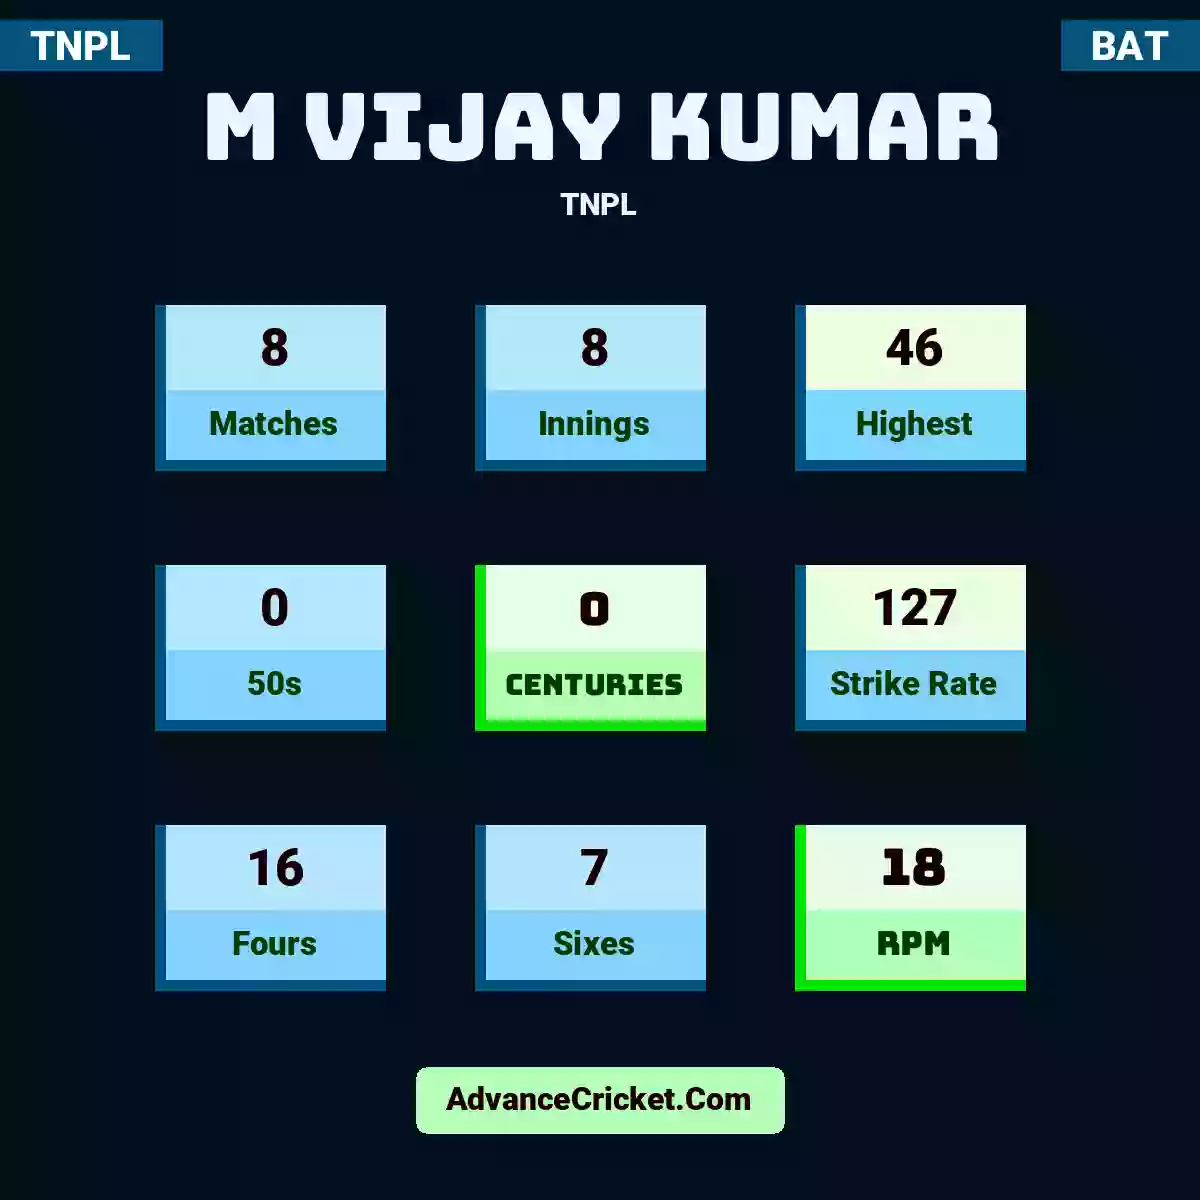 M Vijay Kumar TNPL , M Vijay Kumar played 8 matches, scored 46 runs as highest, 0 half-centuries, and 0 centuries, with a strike rate of 127. M.Kumar hit 16 fours and 7 sixes, with an RPM of 18.